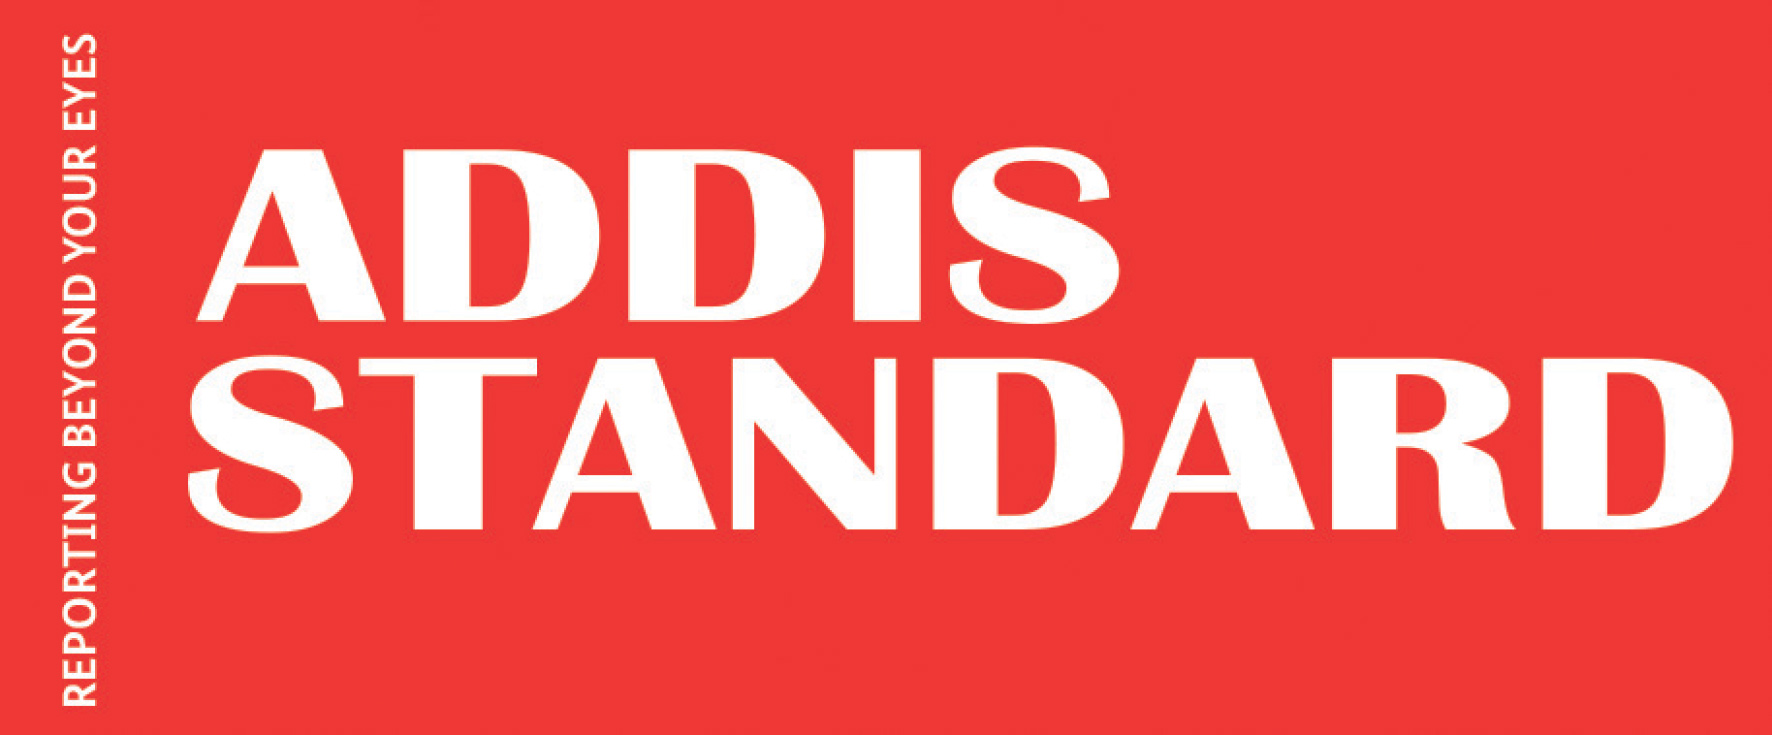 Addis standard